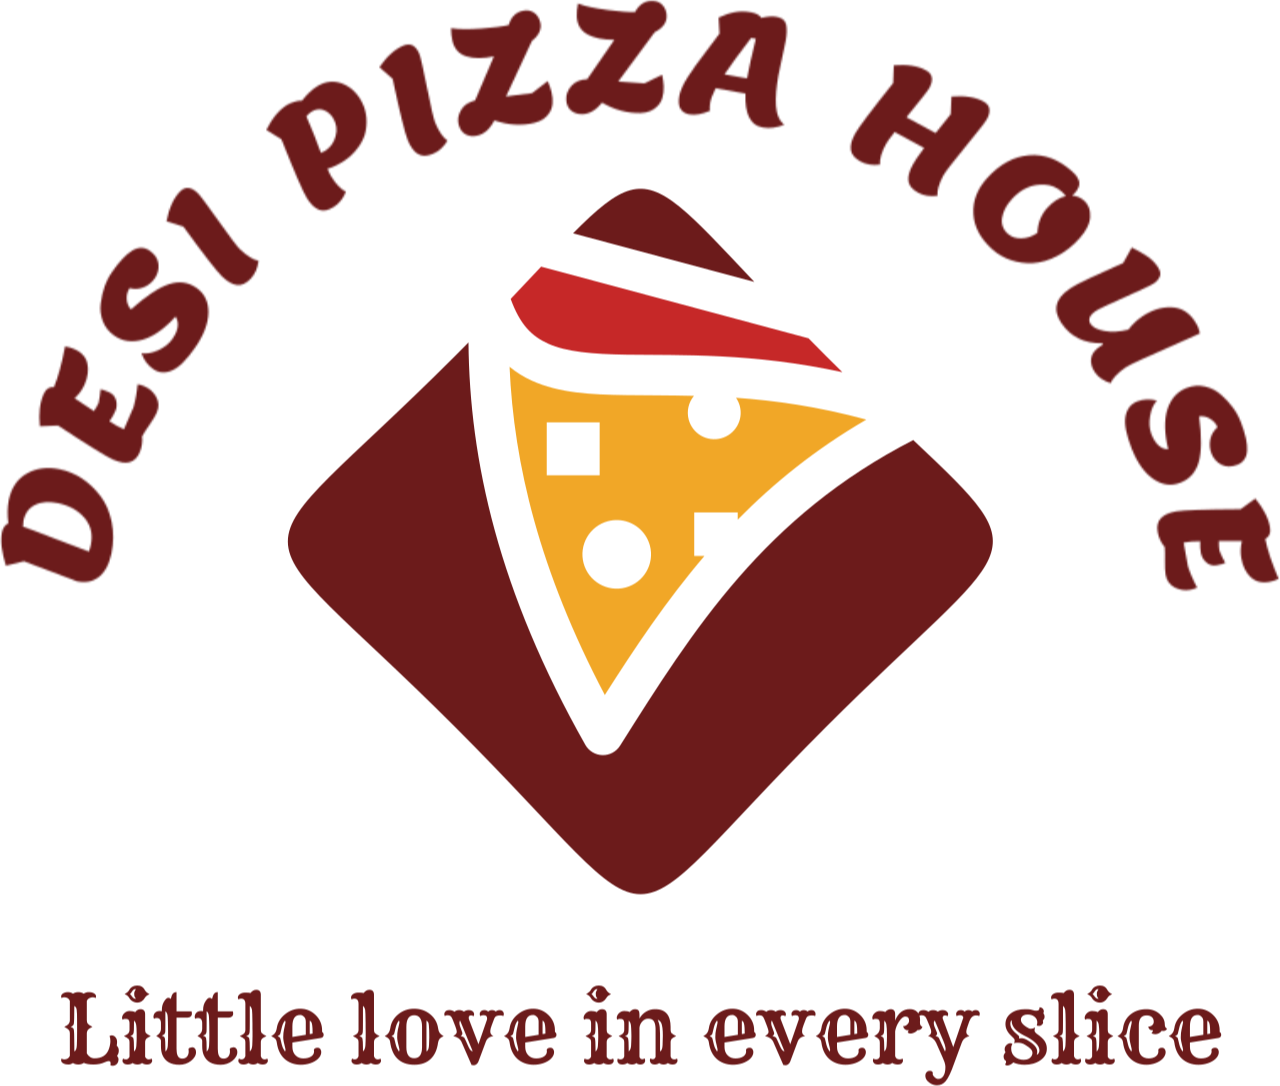 DESI PIZZA HOUSE's web page